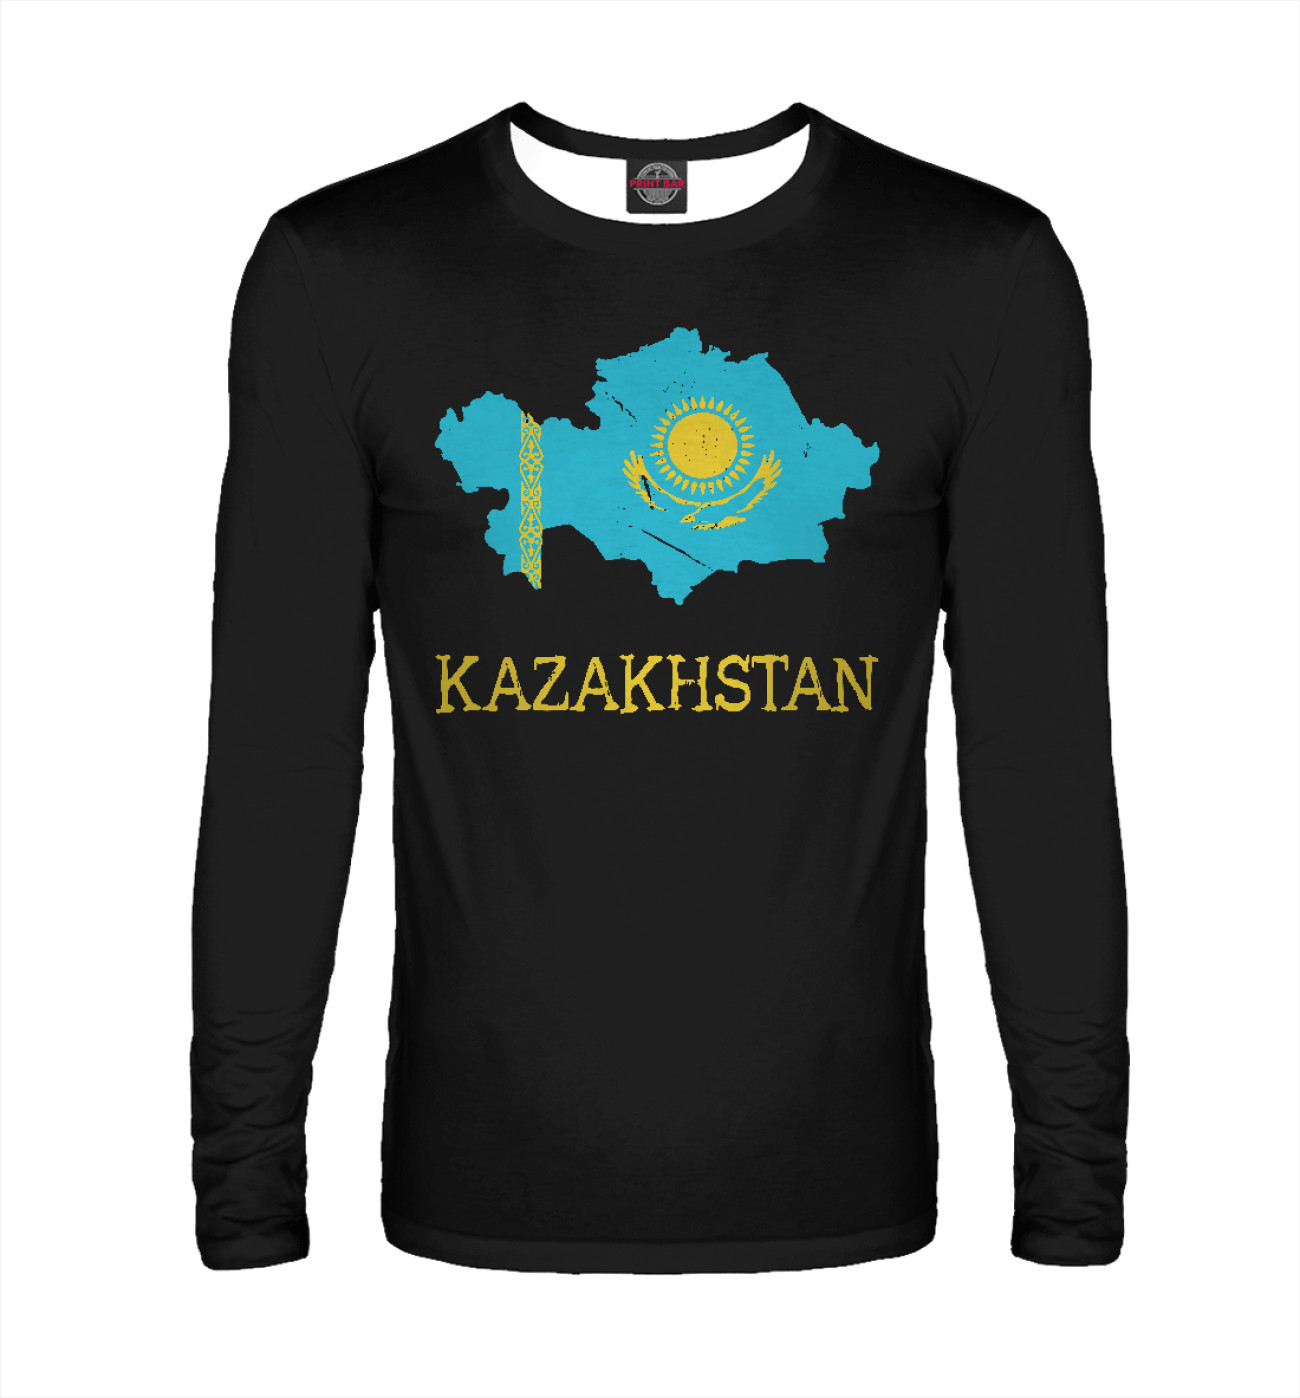 Покупки через казахстан. Казахстан картинки.